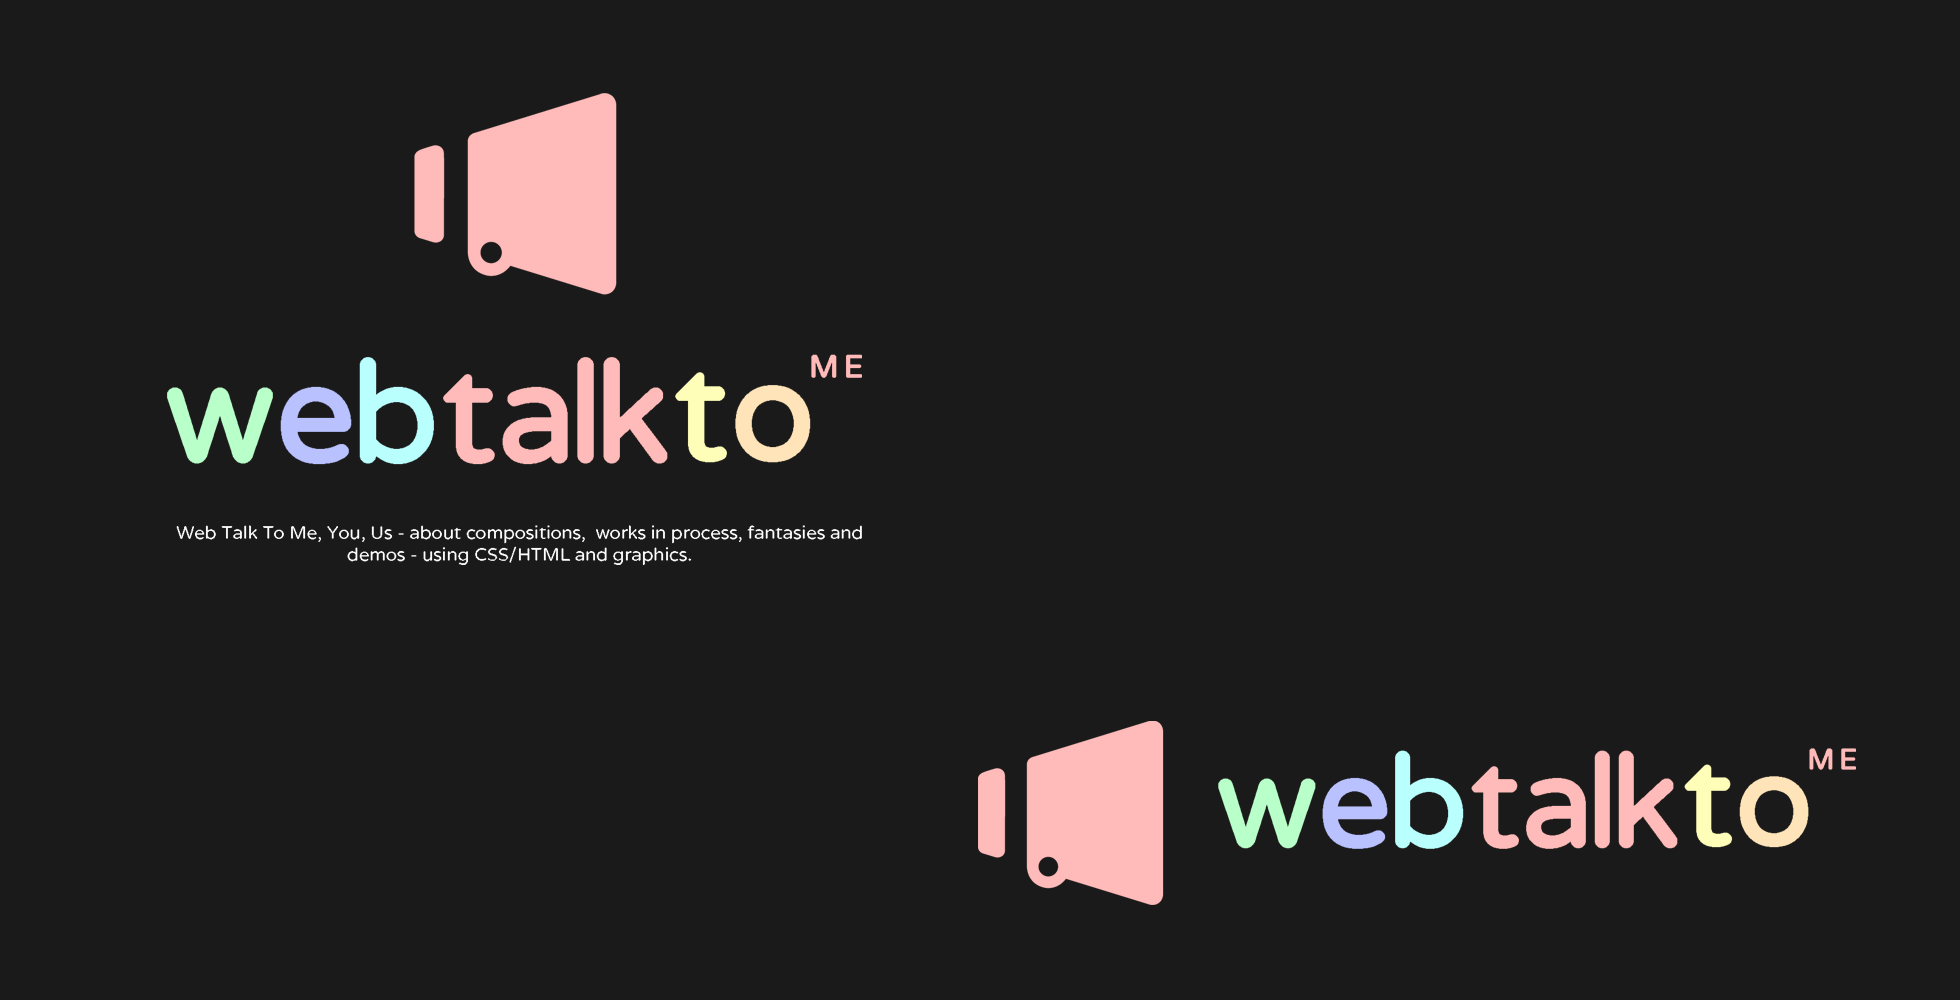 27 vertical and horizontal webtalkto logo